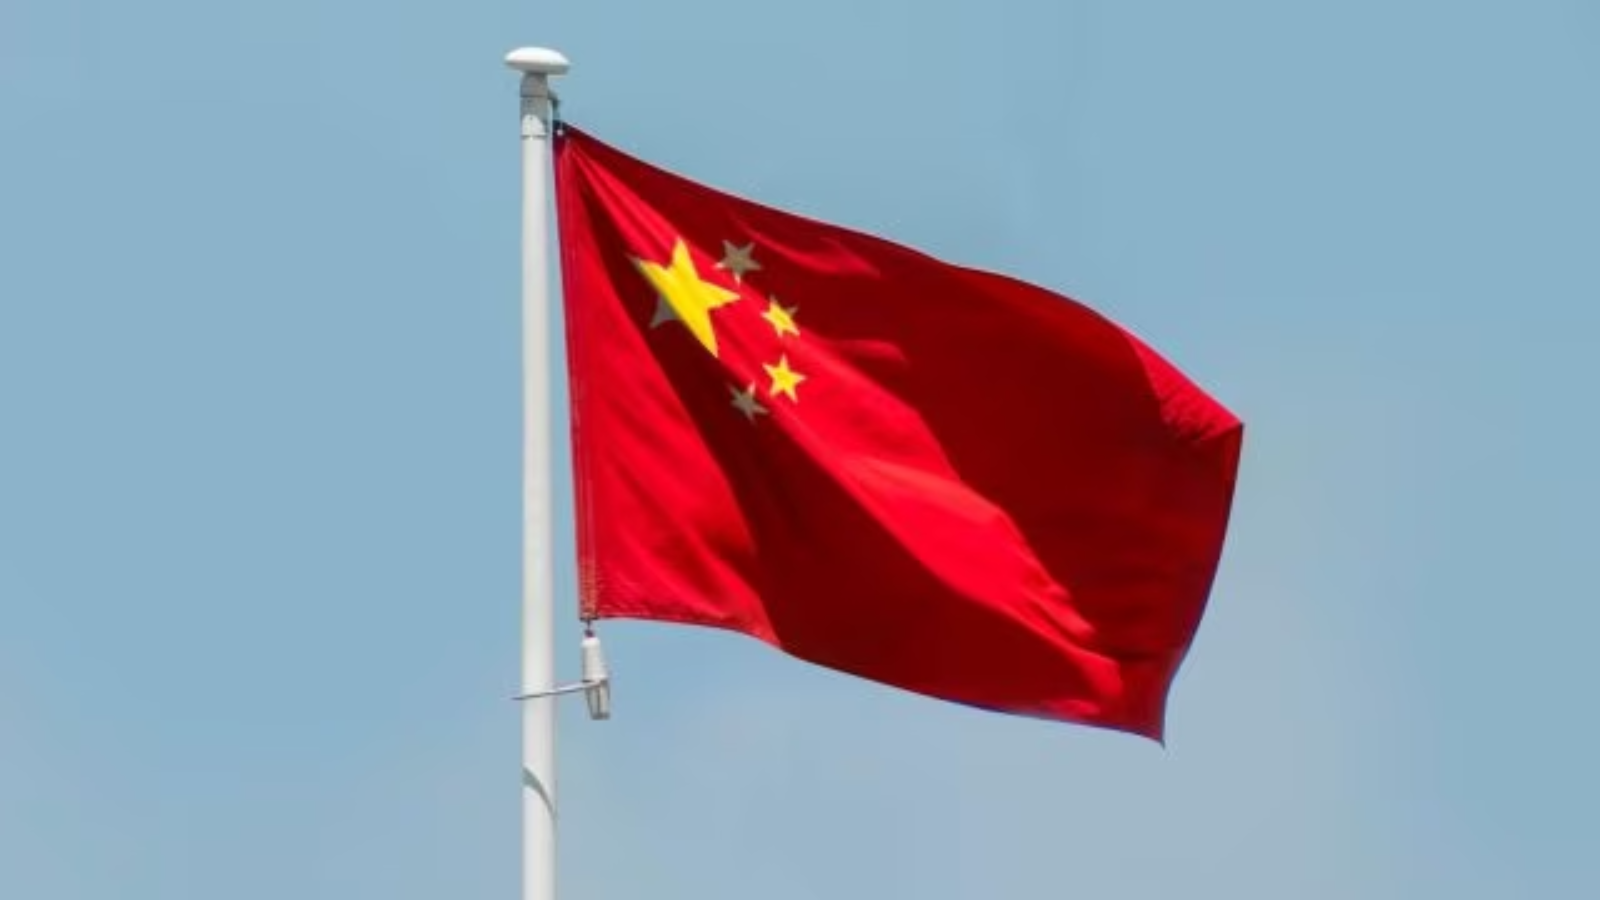 China launches anti-dumping probe into EU, US, Japan, Taiwan plastics